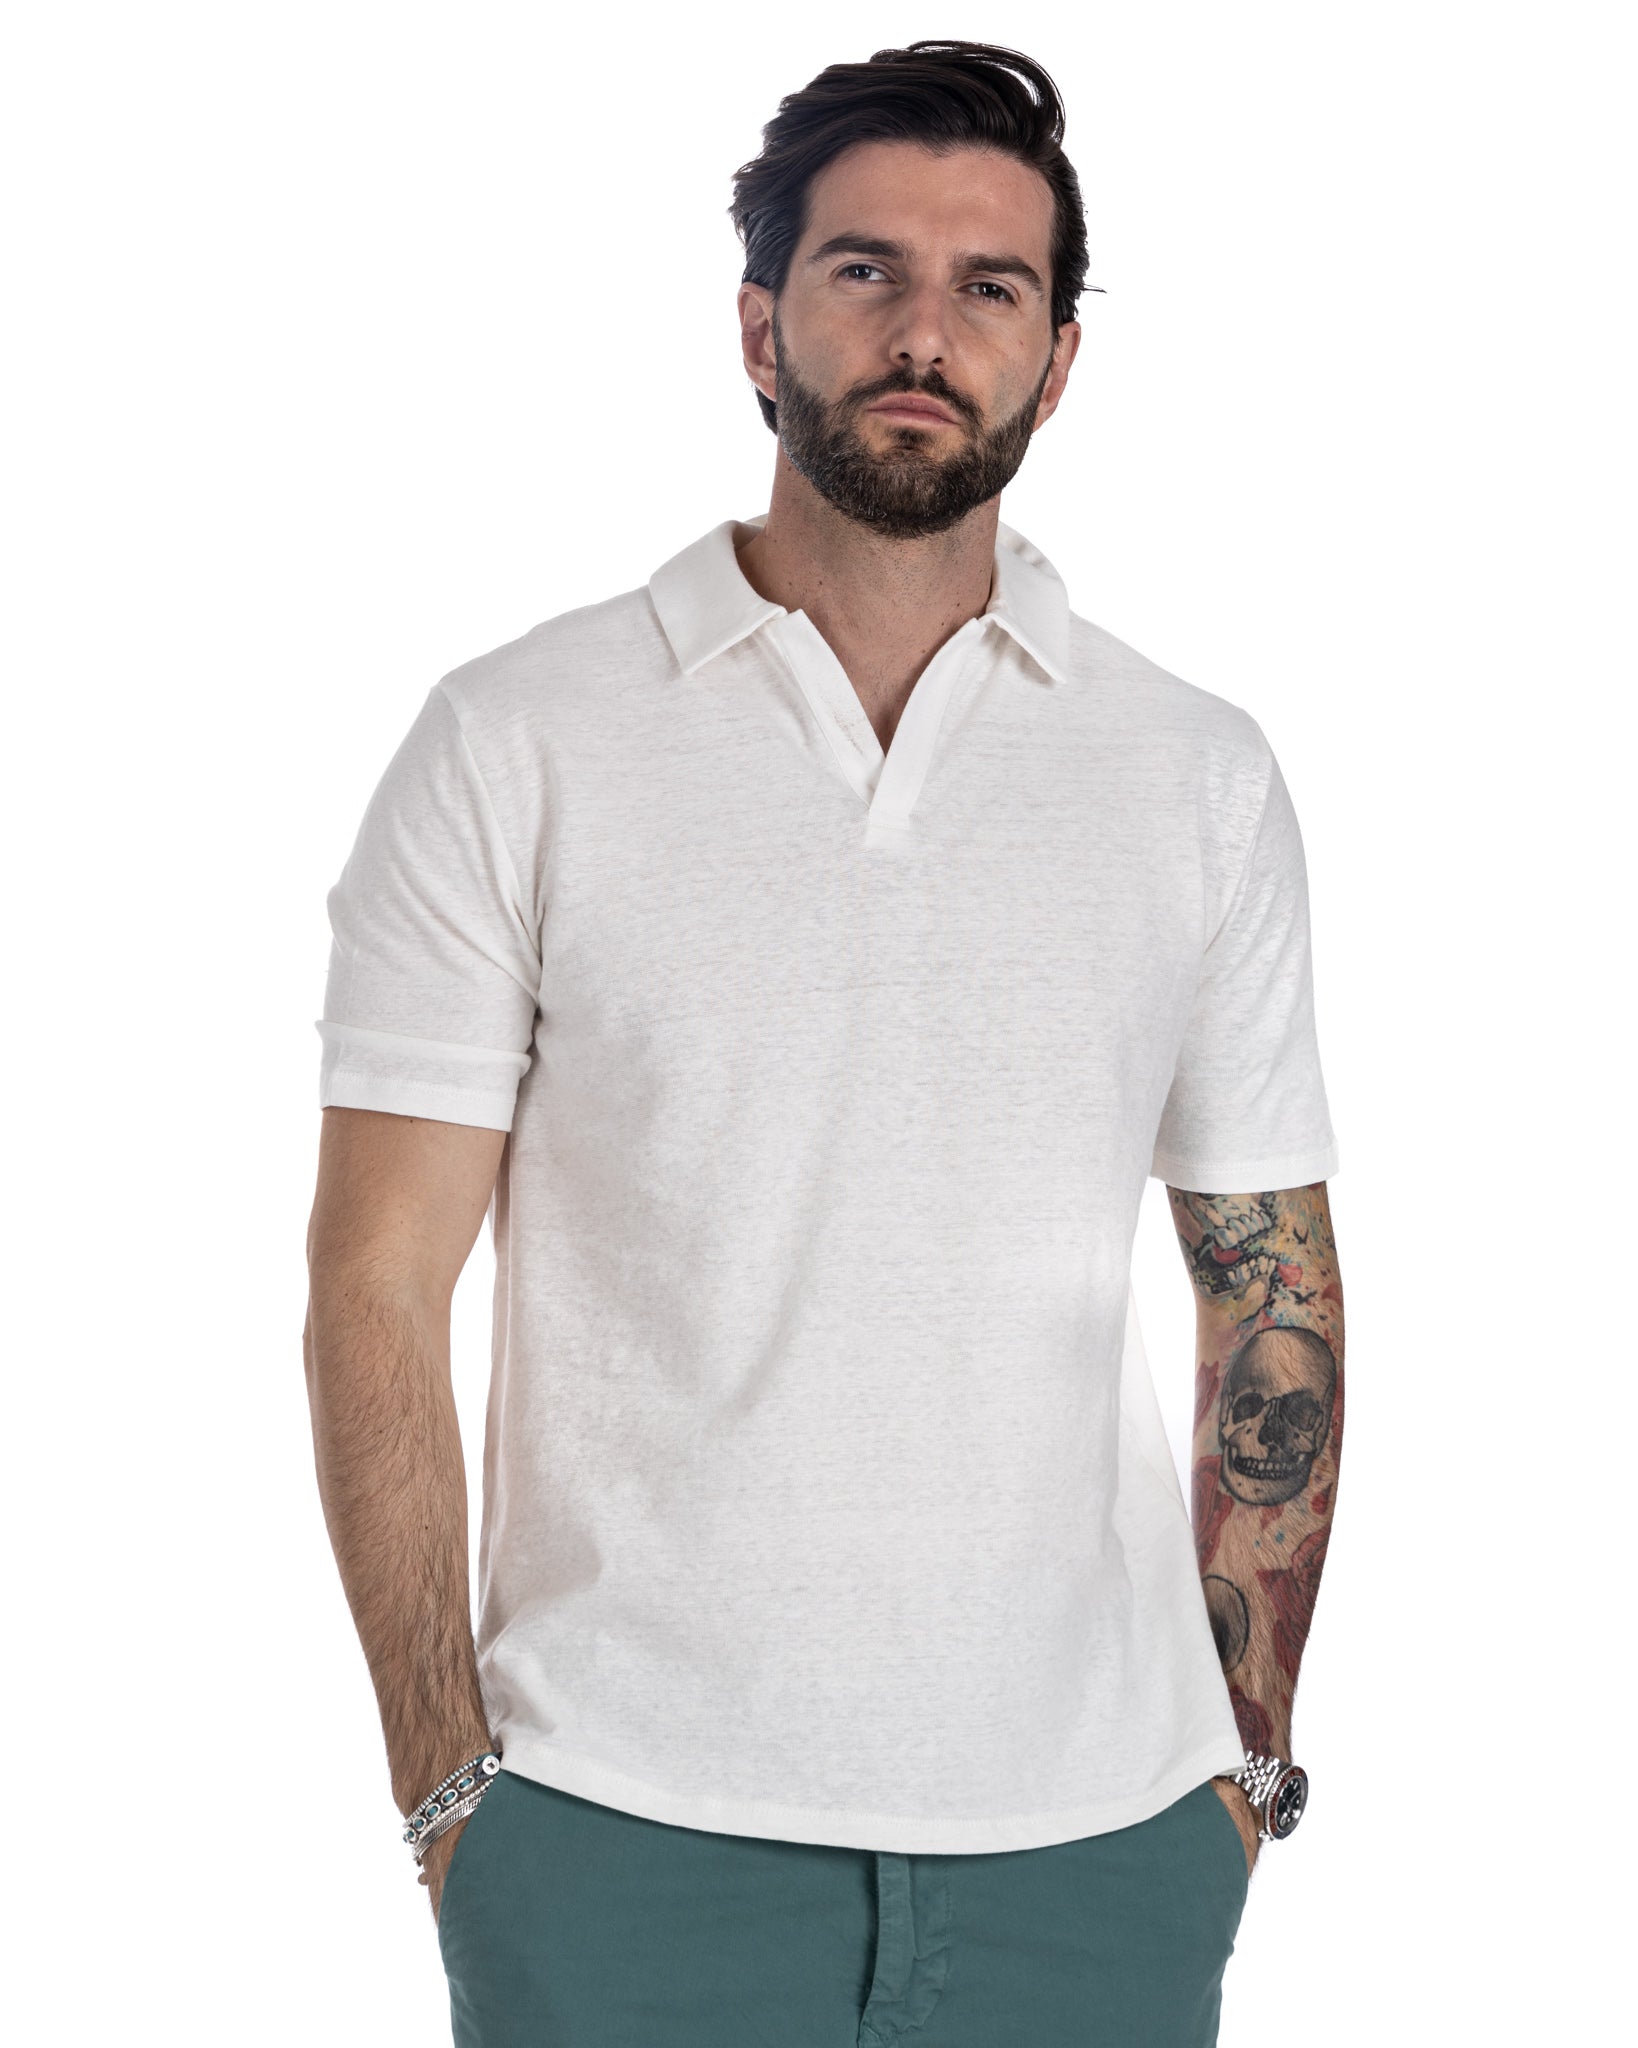 Panarea - white linen polo shirt